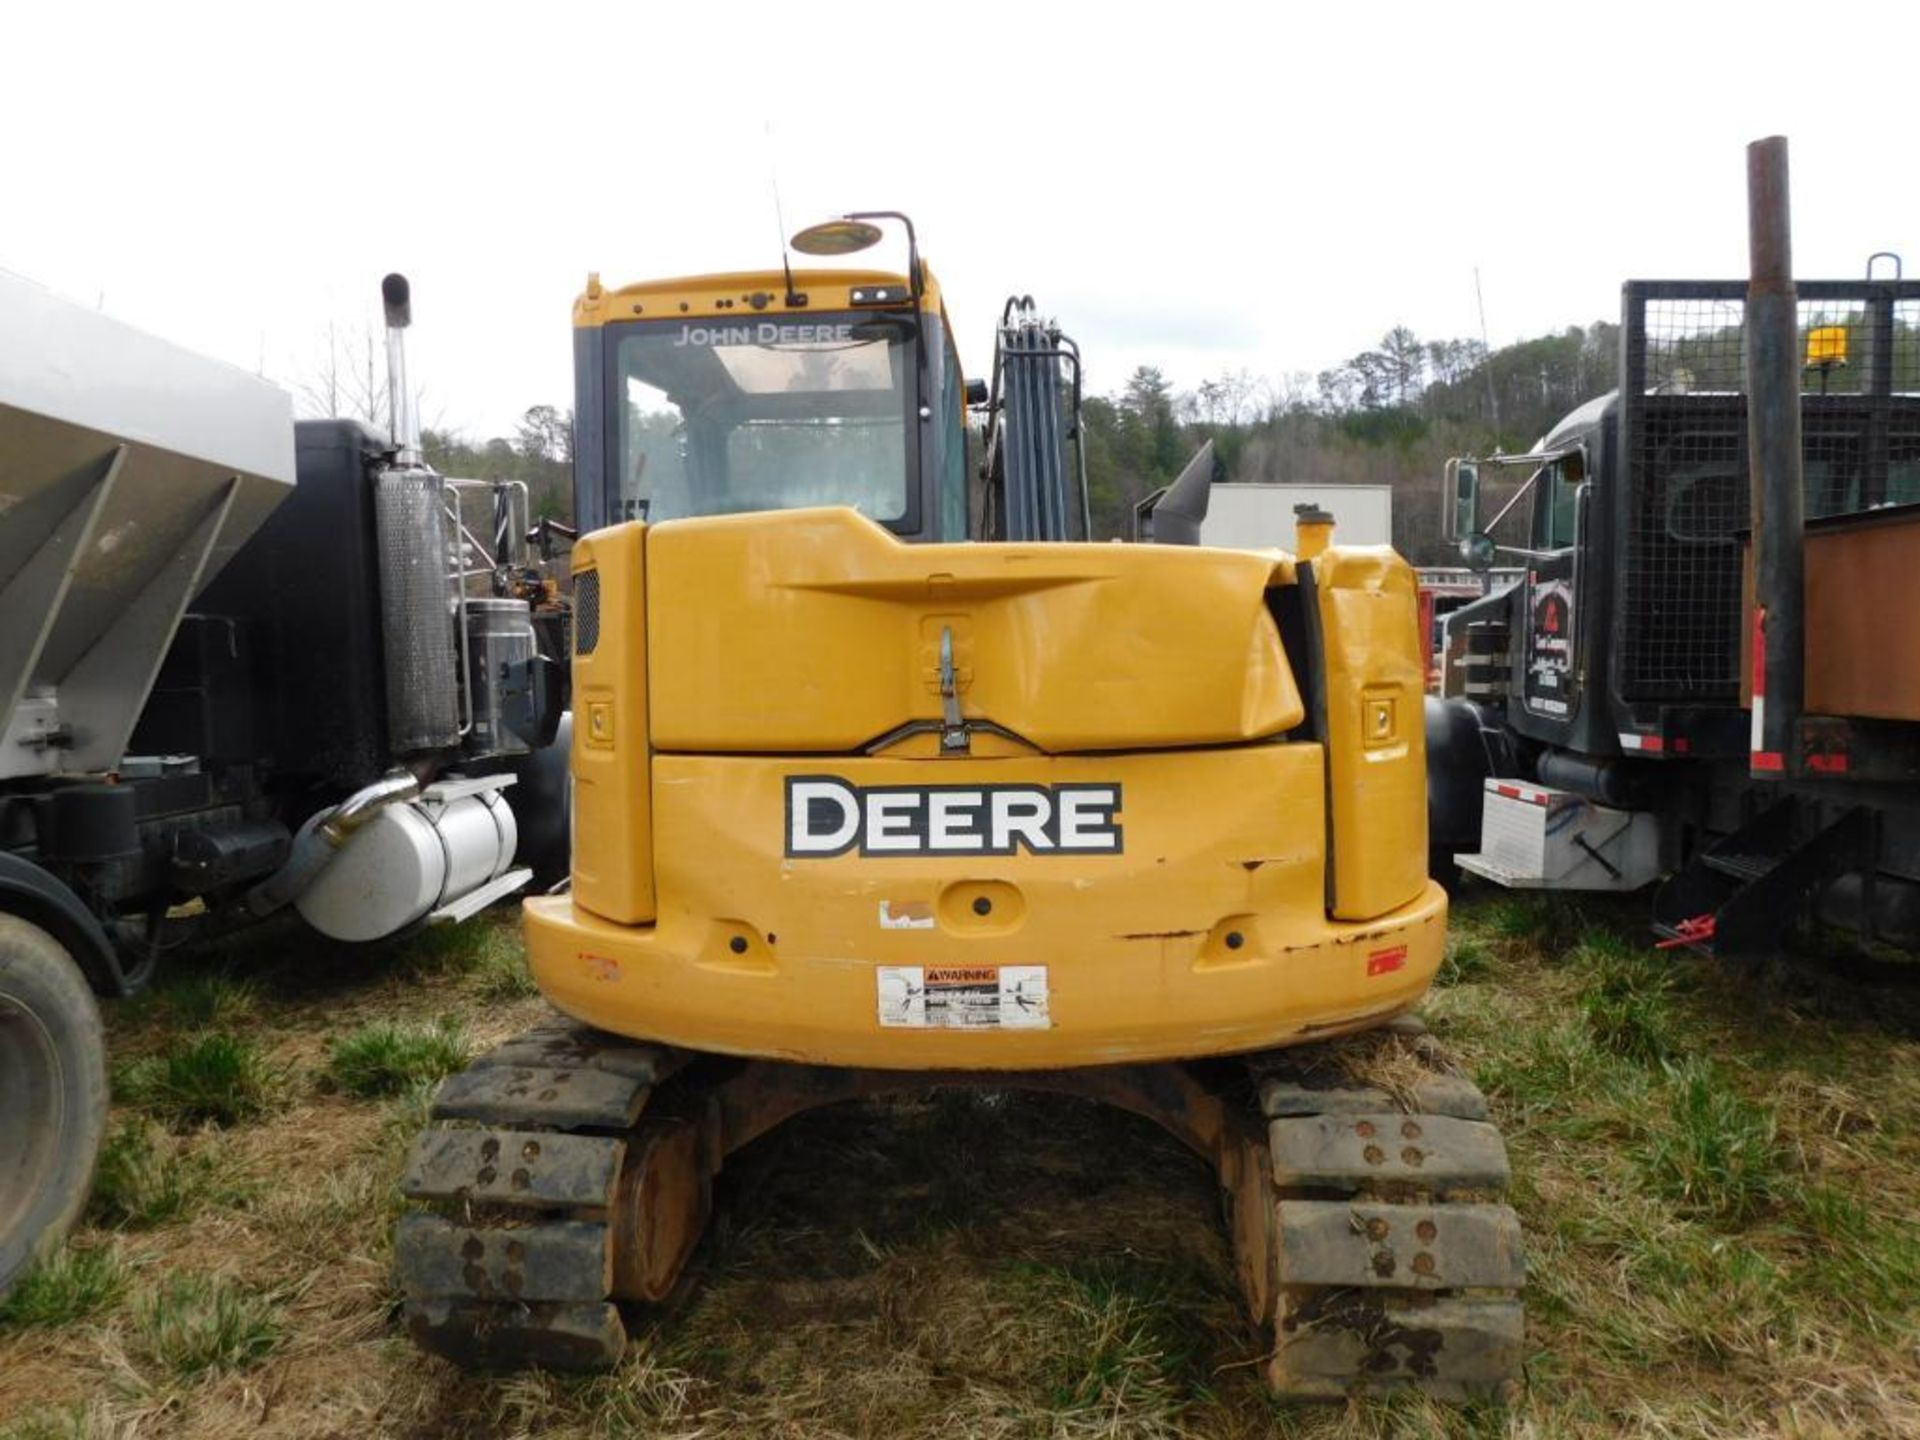 2019 John Deere Mini Excavator, Model 85G, S/N 1FF085GXHJJ020517, 1,556 Hours Indicated, 22" Bucket - Image 11 of 12